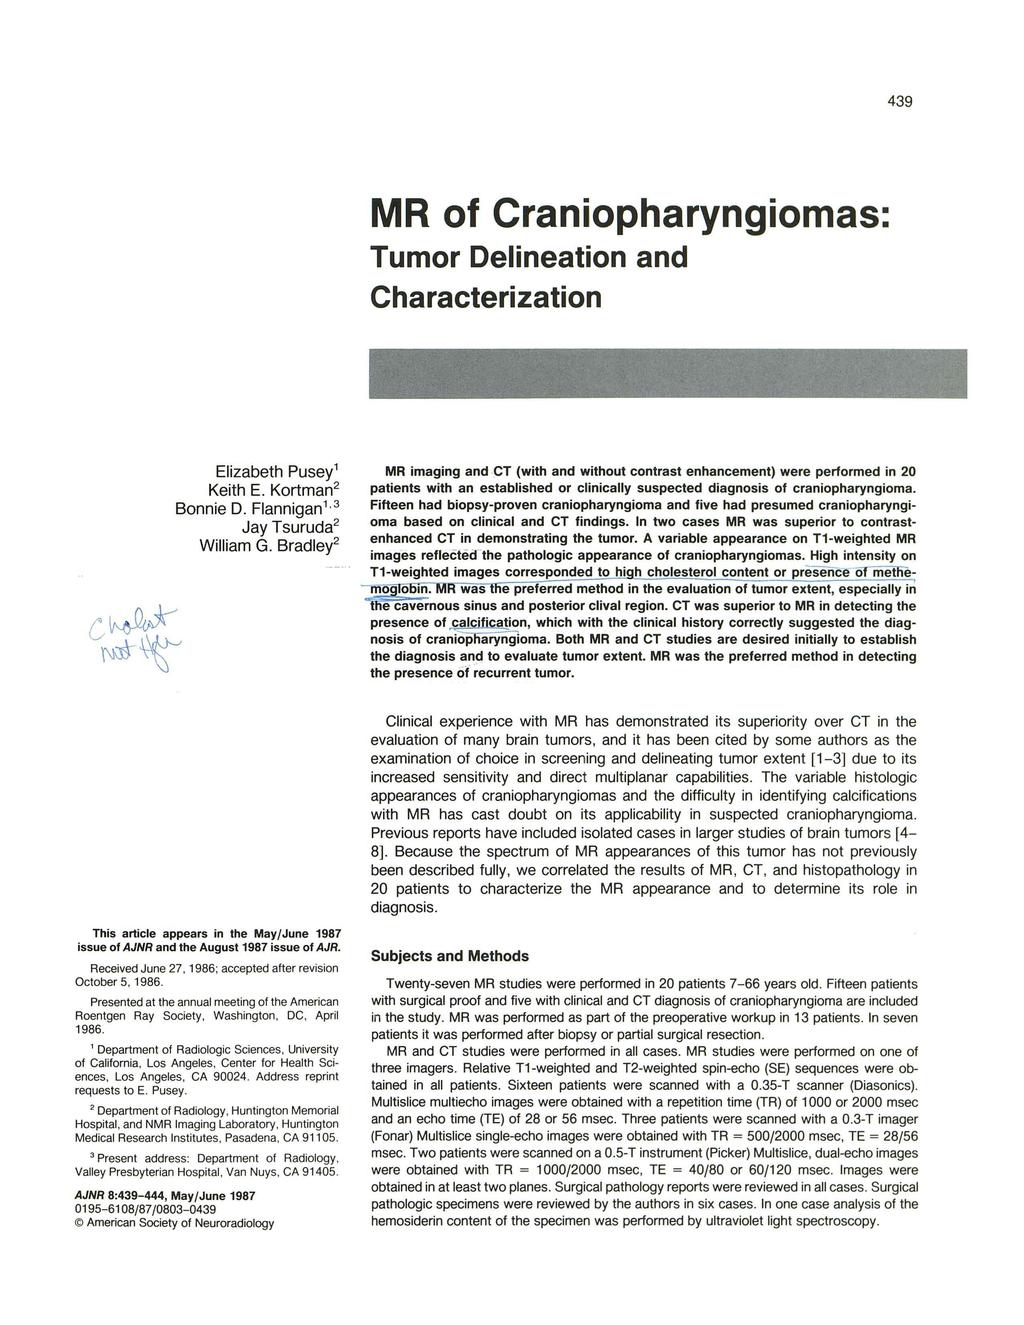 439 MR of Craniopharyngiomas: Tumor Delineation and Charaterization Elizabeth Pusey' Keith E. Kortman 2 onnie D. Flannigan, 3 Jay Tsuruda 2 William G.